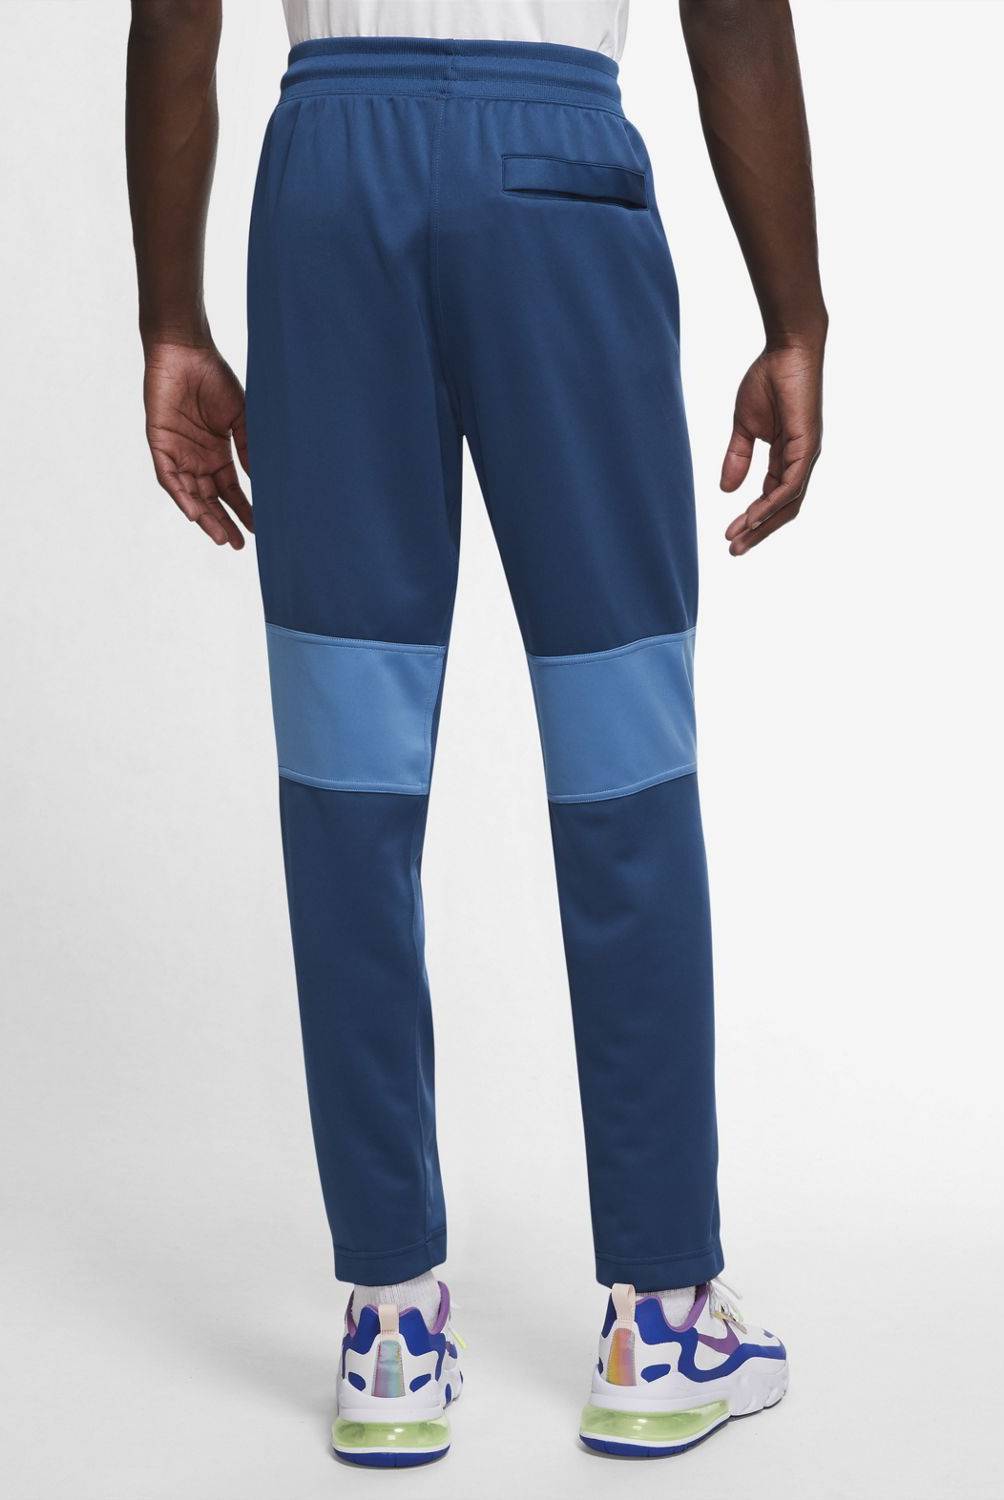 NIKE - Nike Pantalon de Buzo Deportivo Hombre